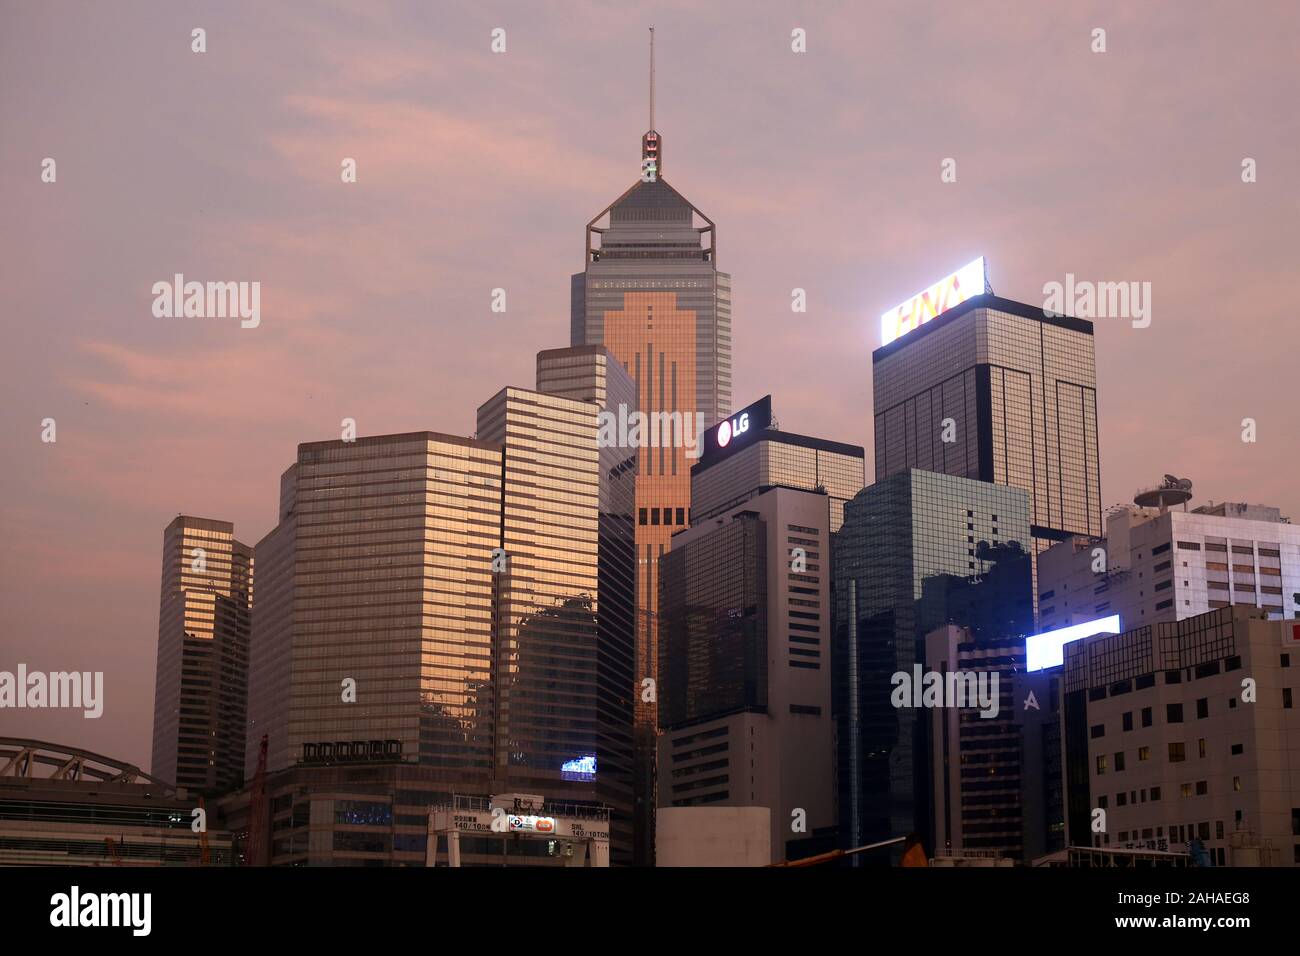 09.12.2017, Hong Kong, Hong Kong, China - Skyscrapers in Wan Chai district with the Hong Kong Central Plaza Hotel. 00S171209D118CAROEX.JPG [MODEL RELE Stock Photo